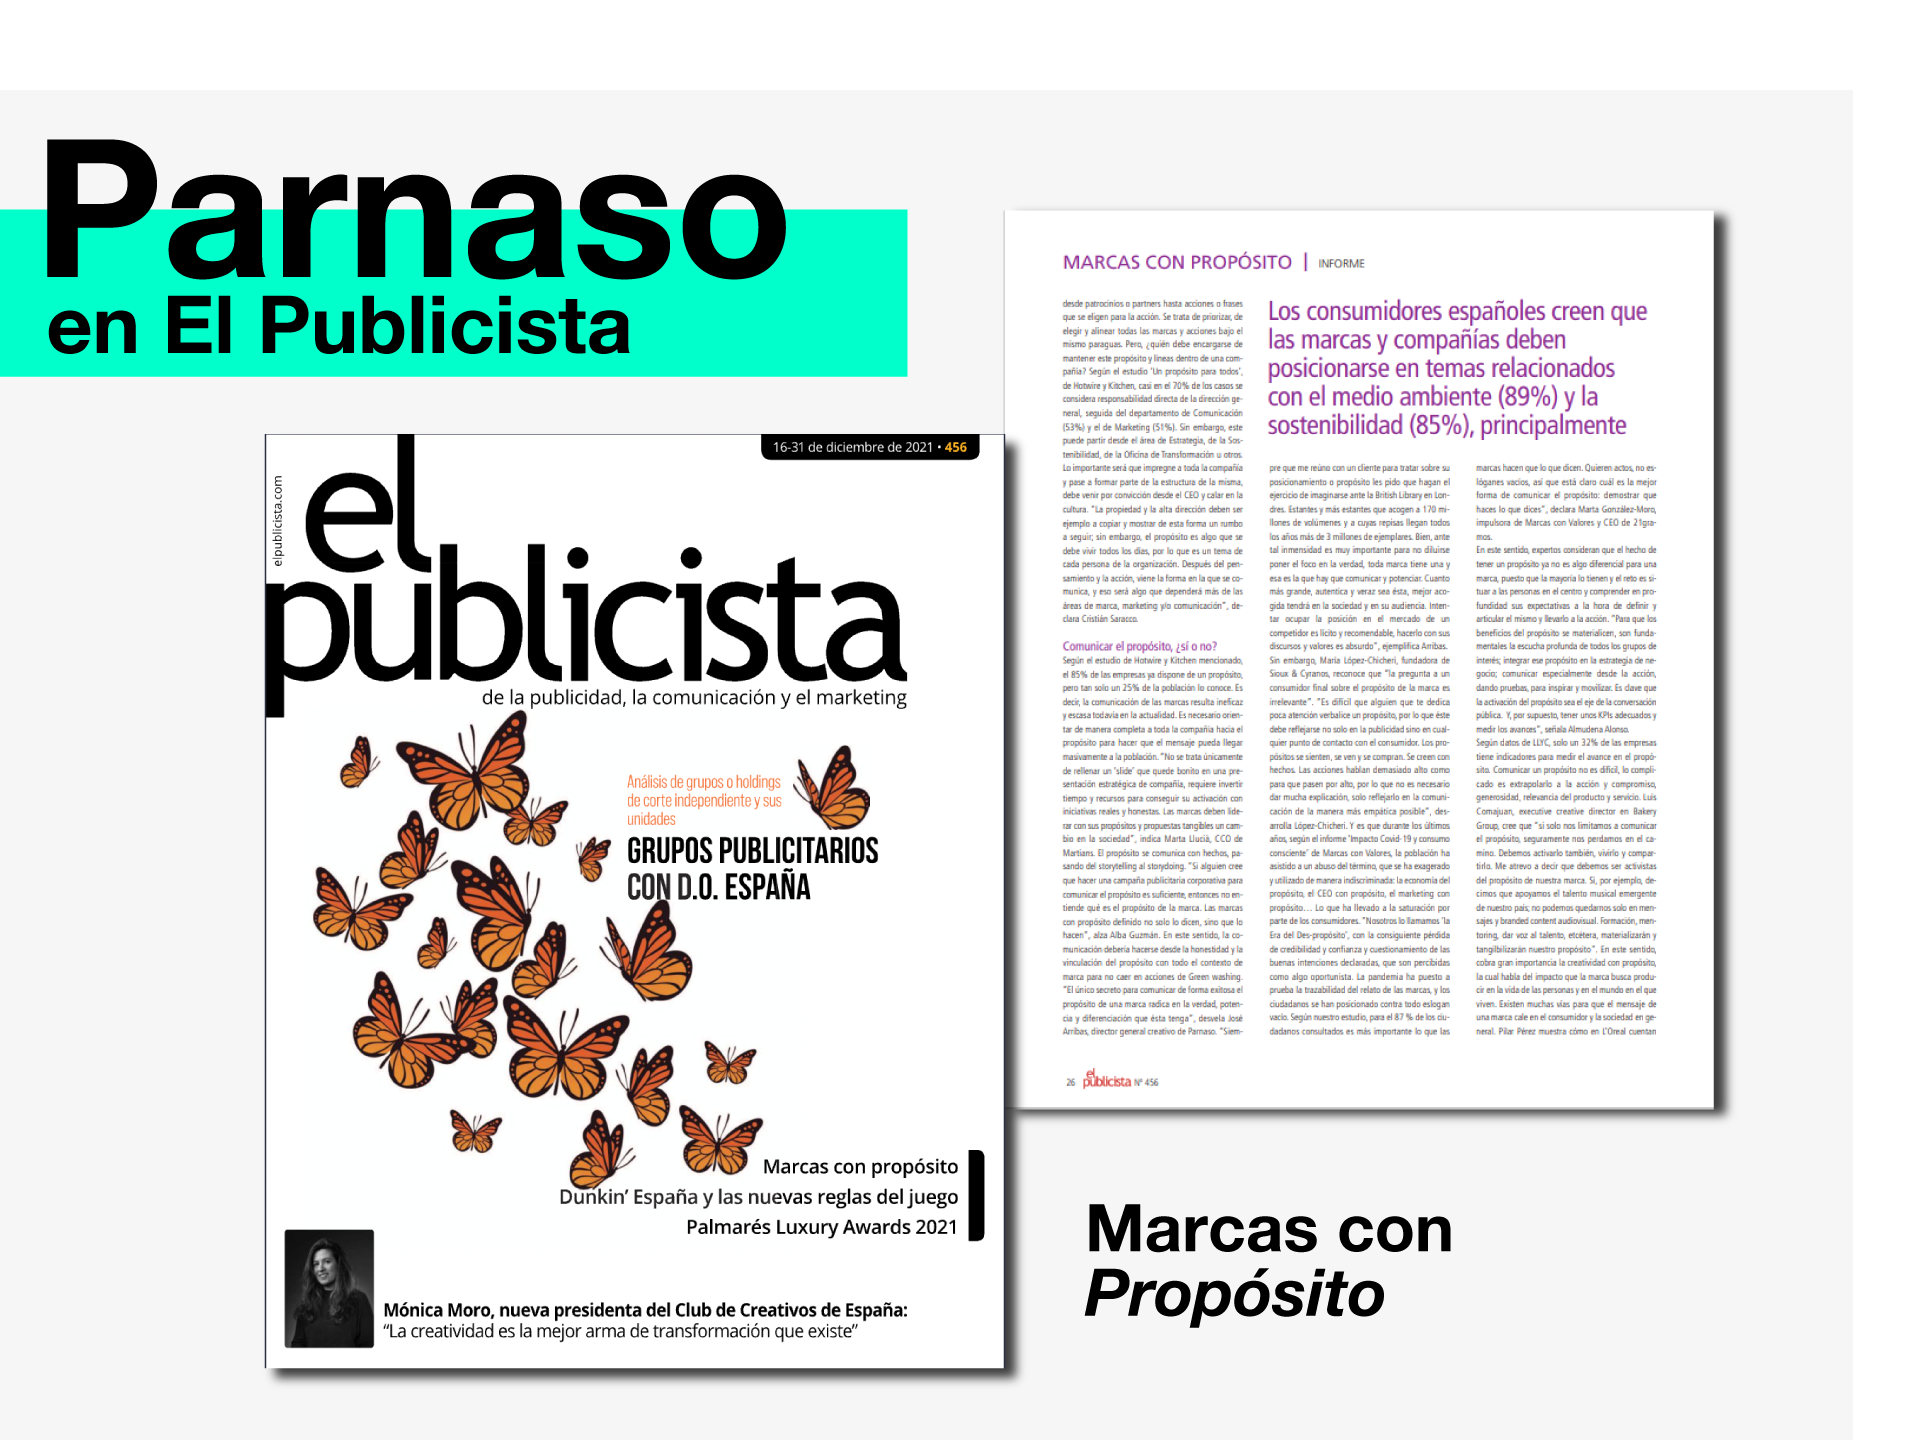 Parnaso, 2ª agencia más creativa de España 2013 - Parnaso